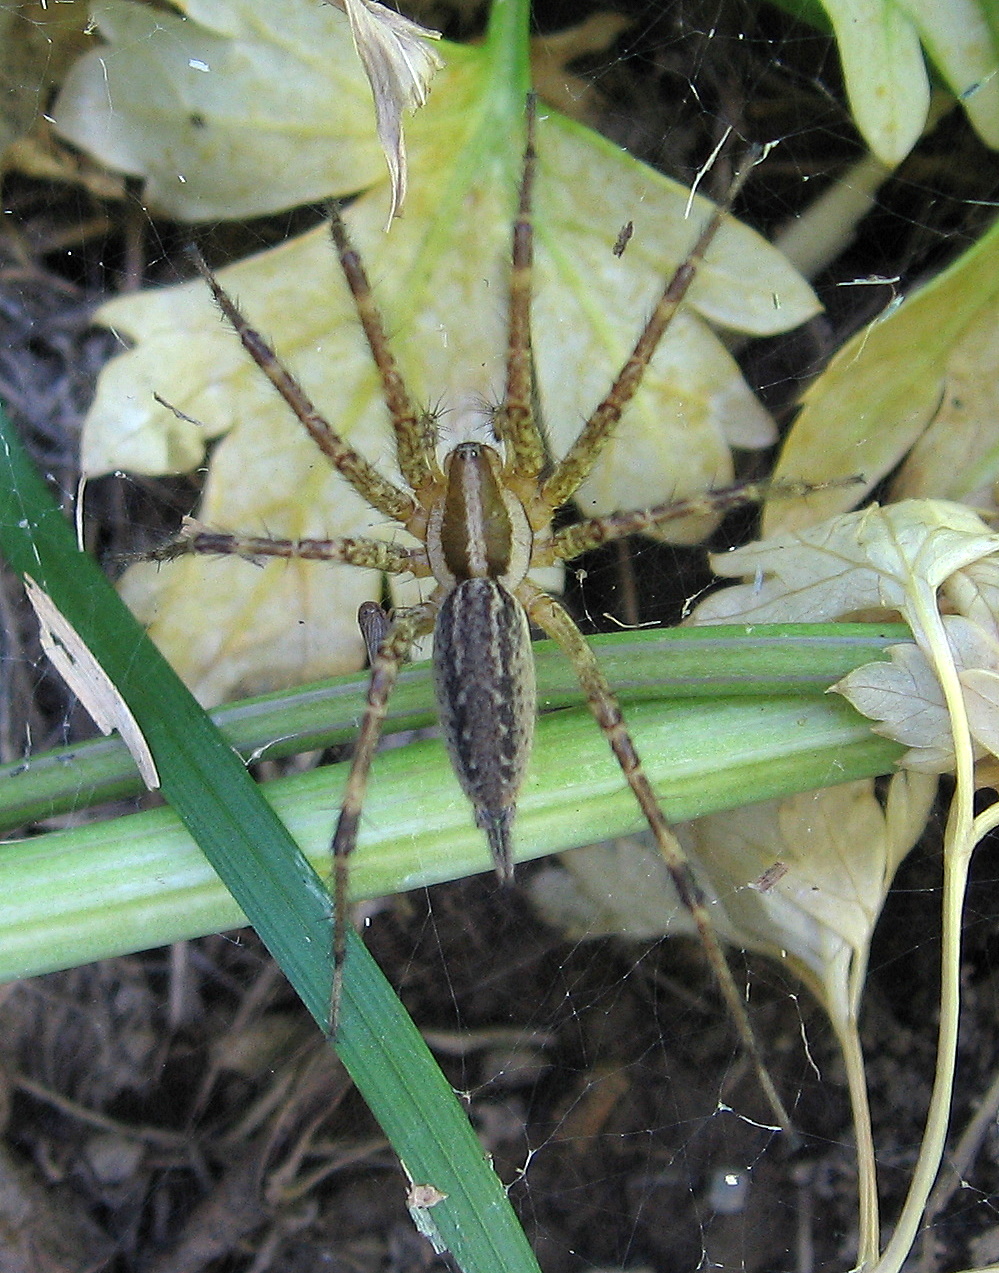 Zoologger: Female spider kills male to attract a mate